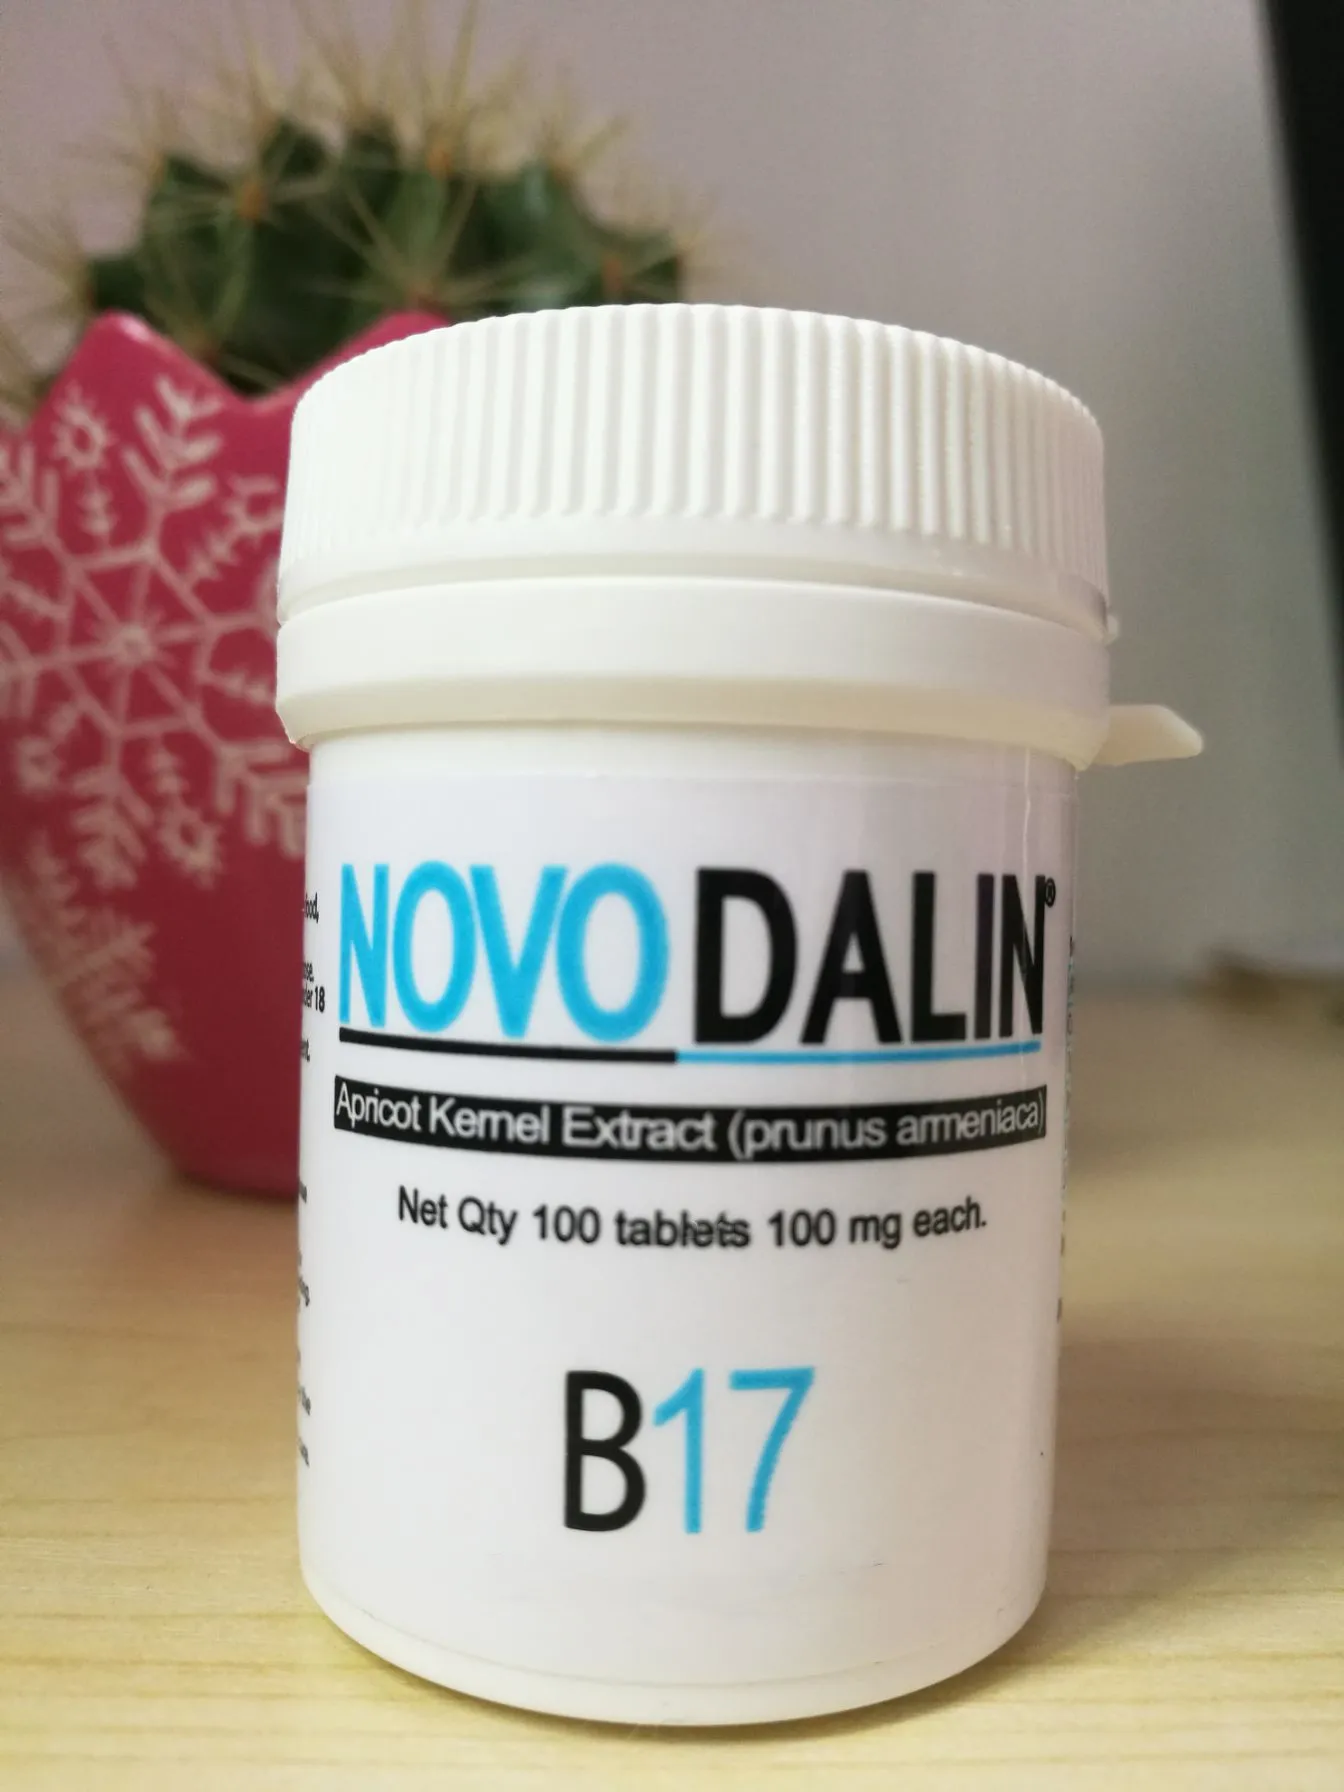 Novodalin Vitamin B17 Amygdalin 100mg/500mg 100 caps Prevent C a ncer